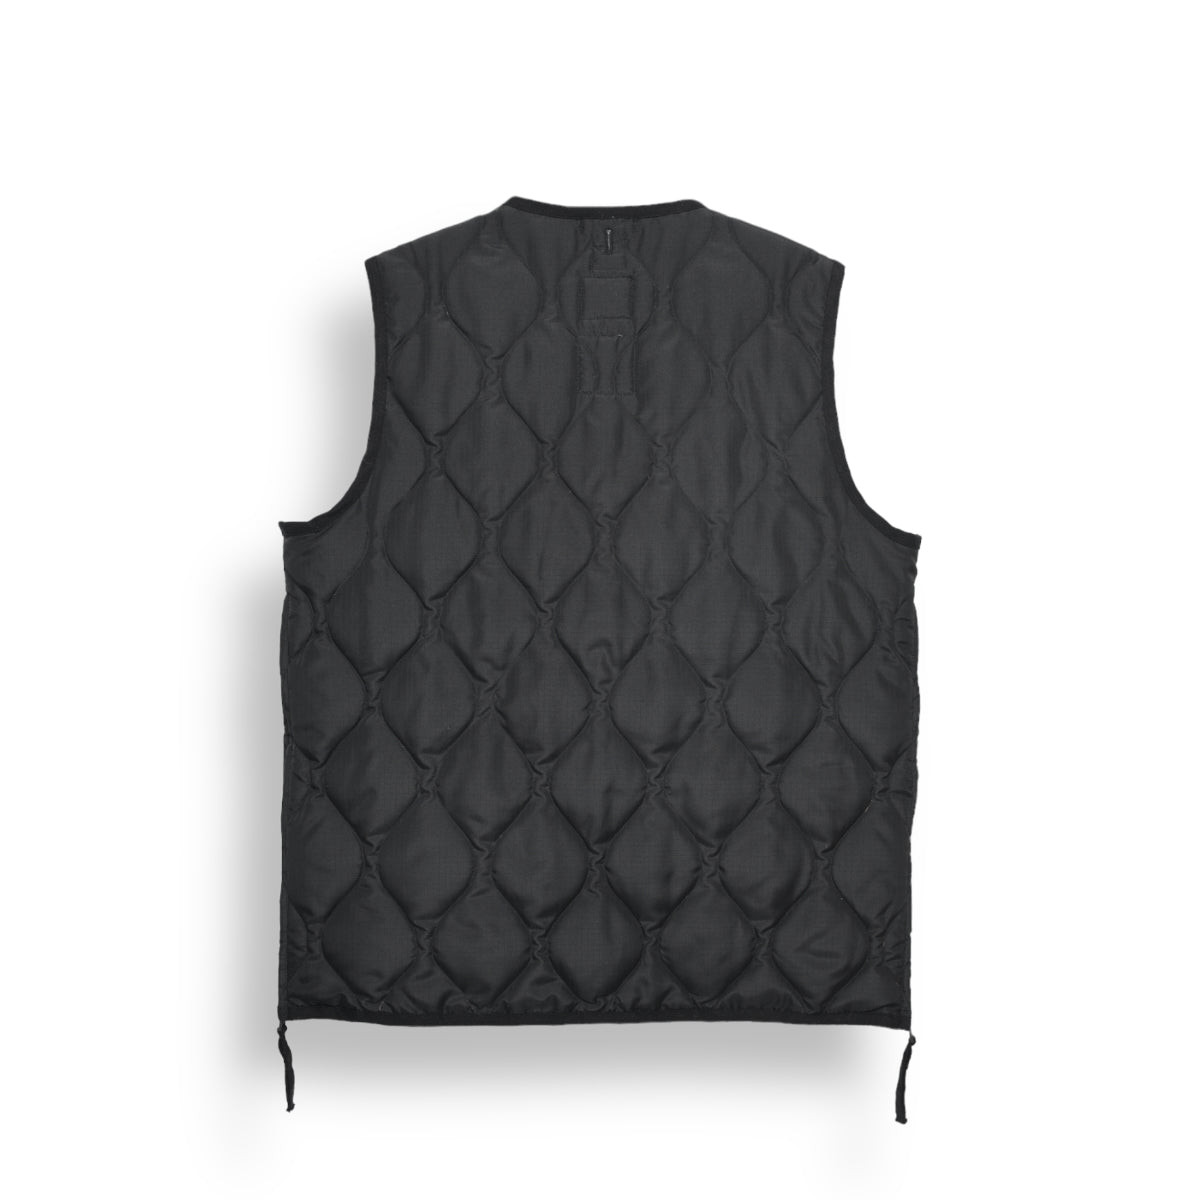 TAION Military Zip V-Neck Vest black